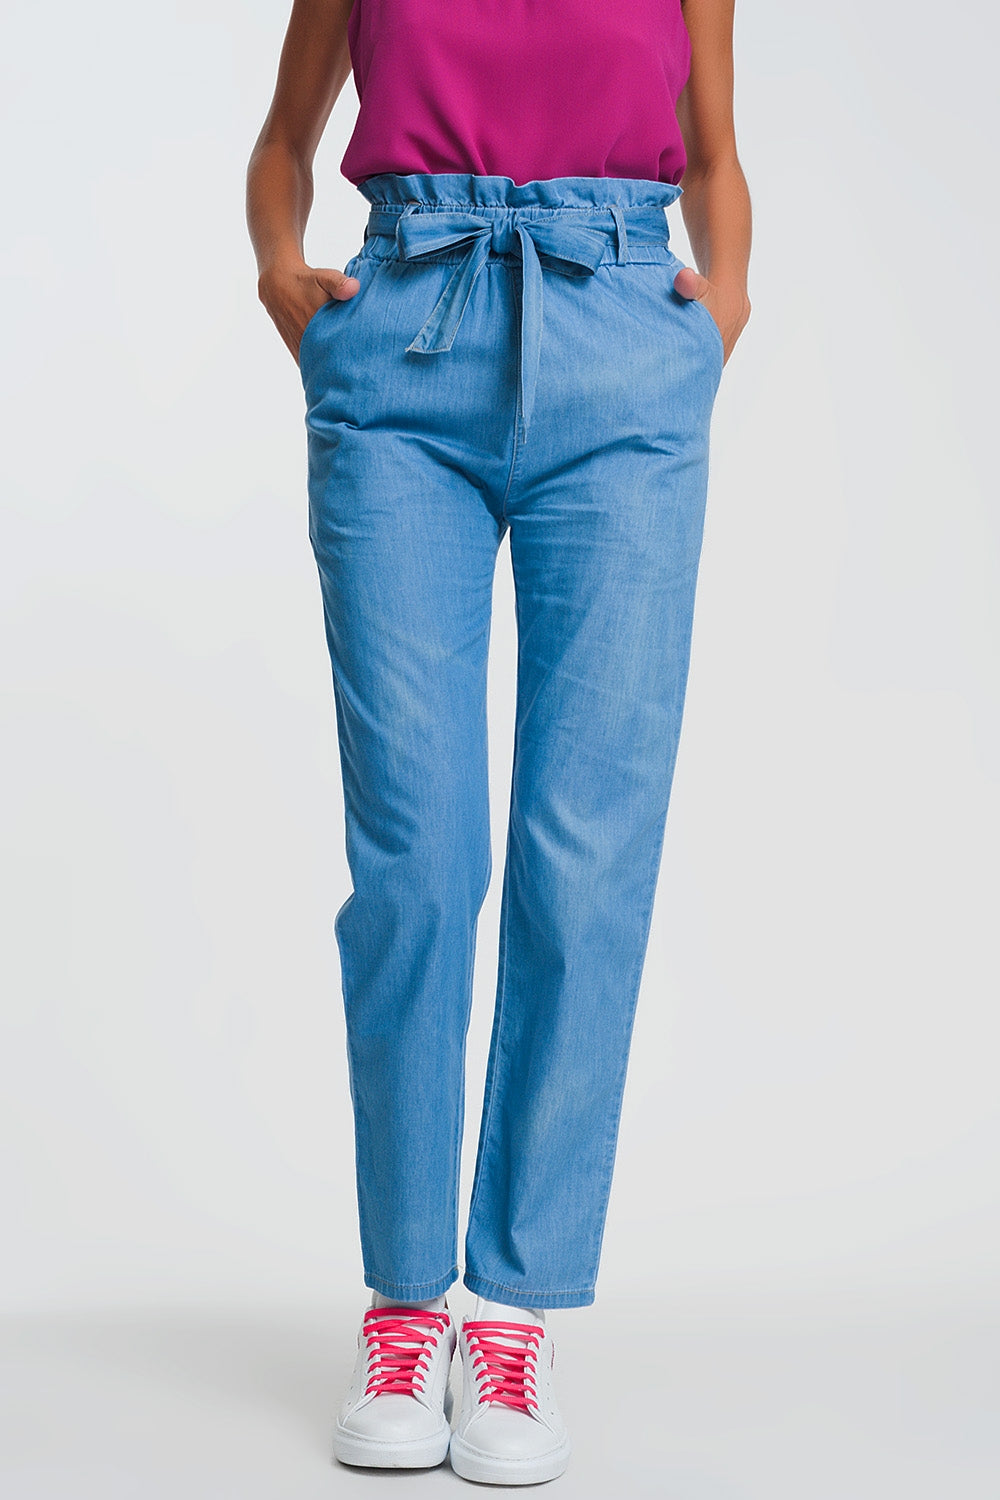 Q2 Jeans leggeri paperbag con vita raccolta e cintura